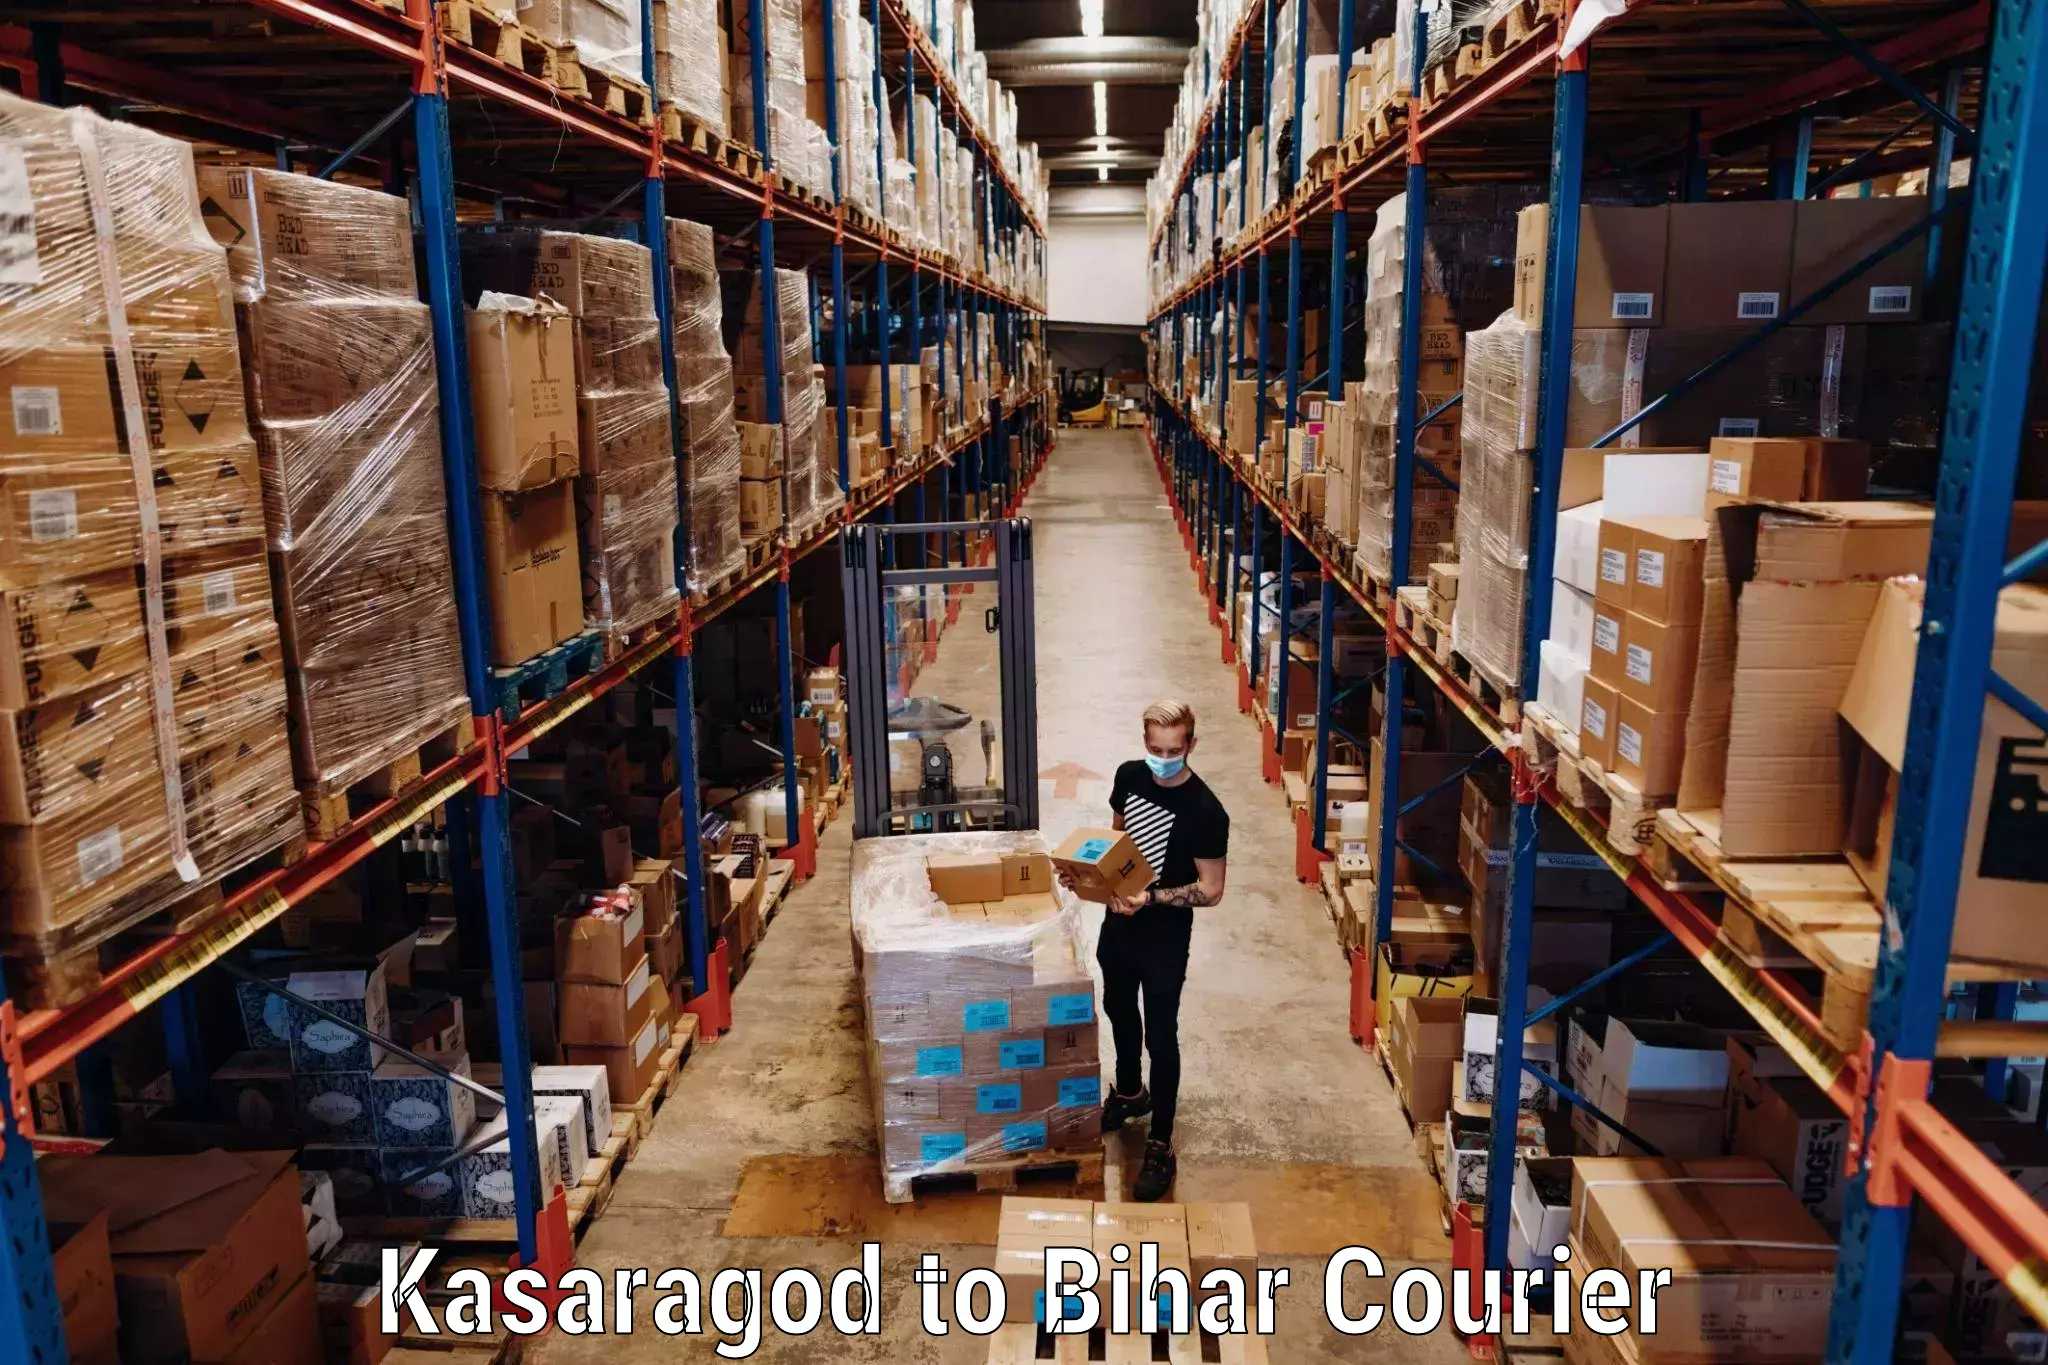 Luggage transport company Kasaragod to Bharwara